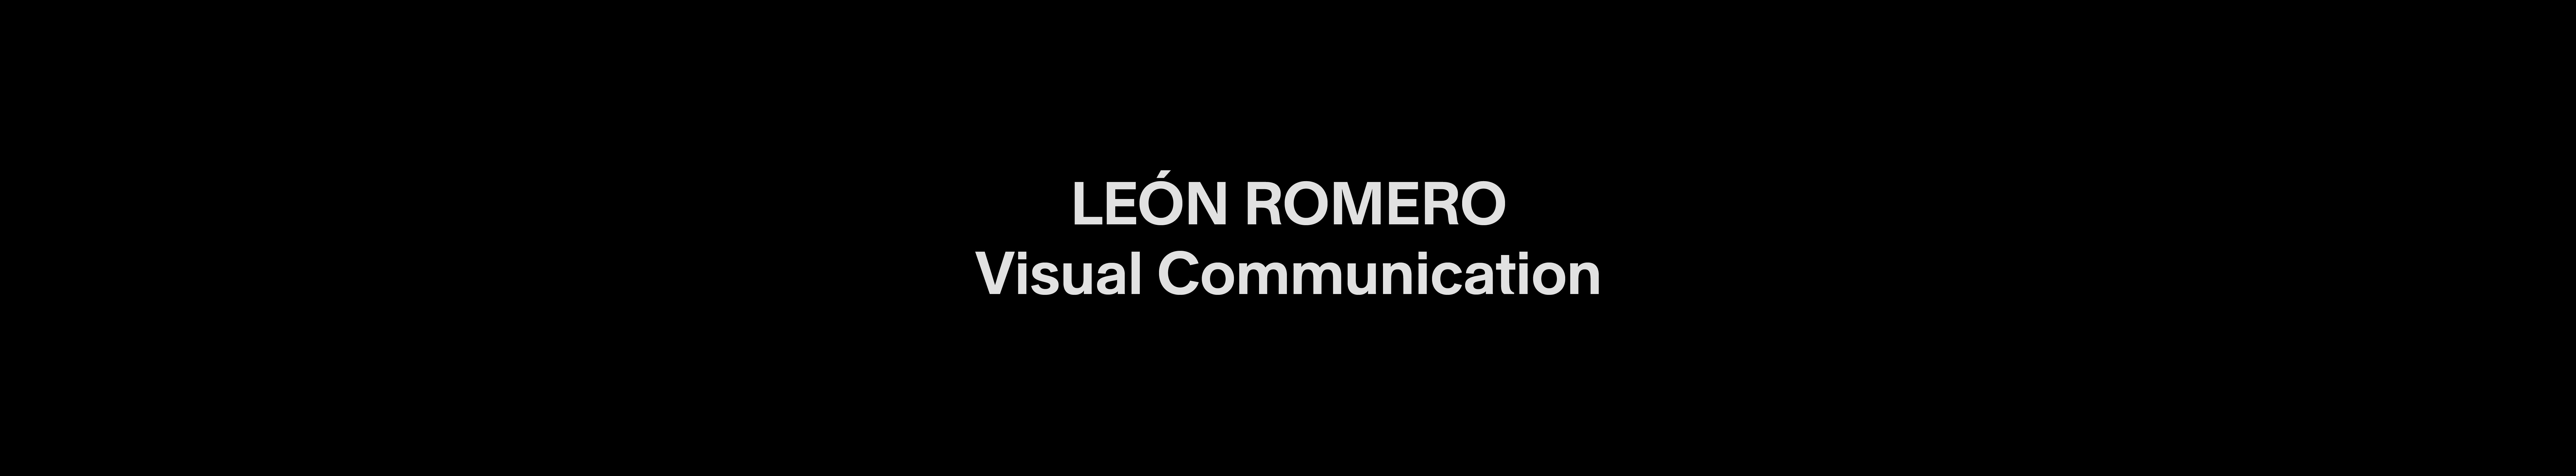 LEÓN ROMERO's profile banner